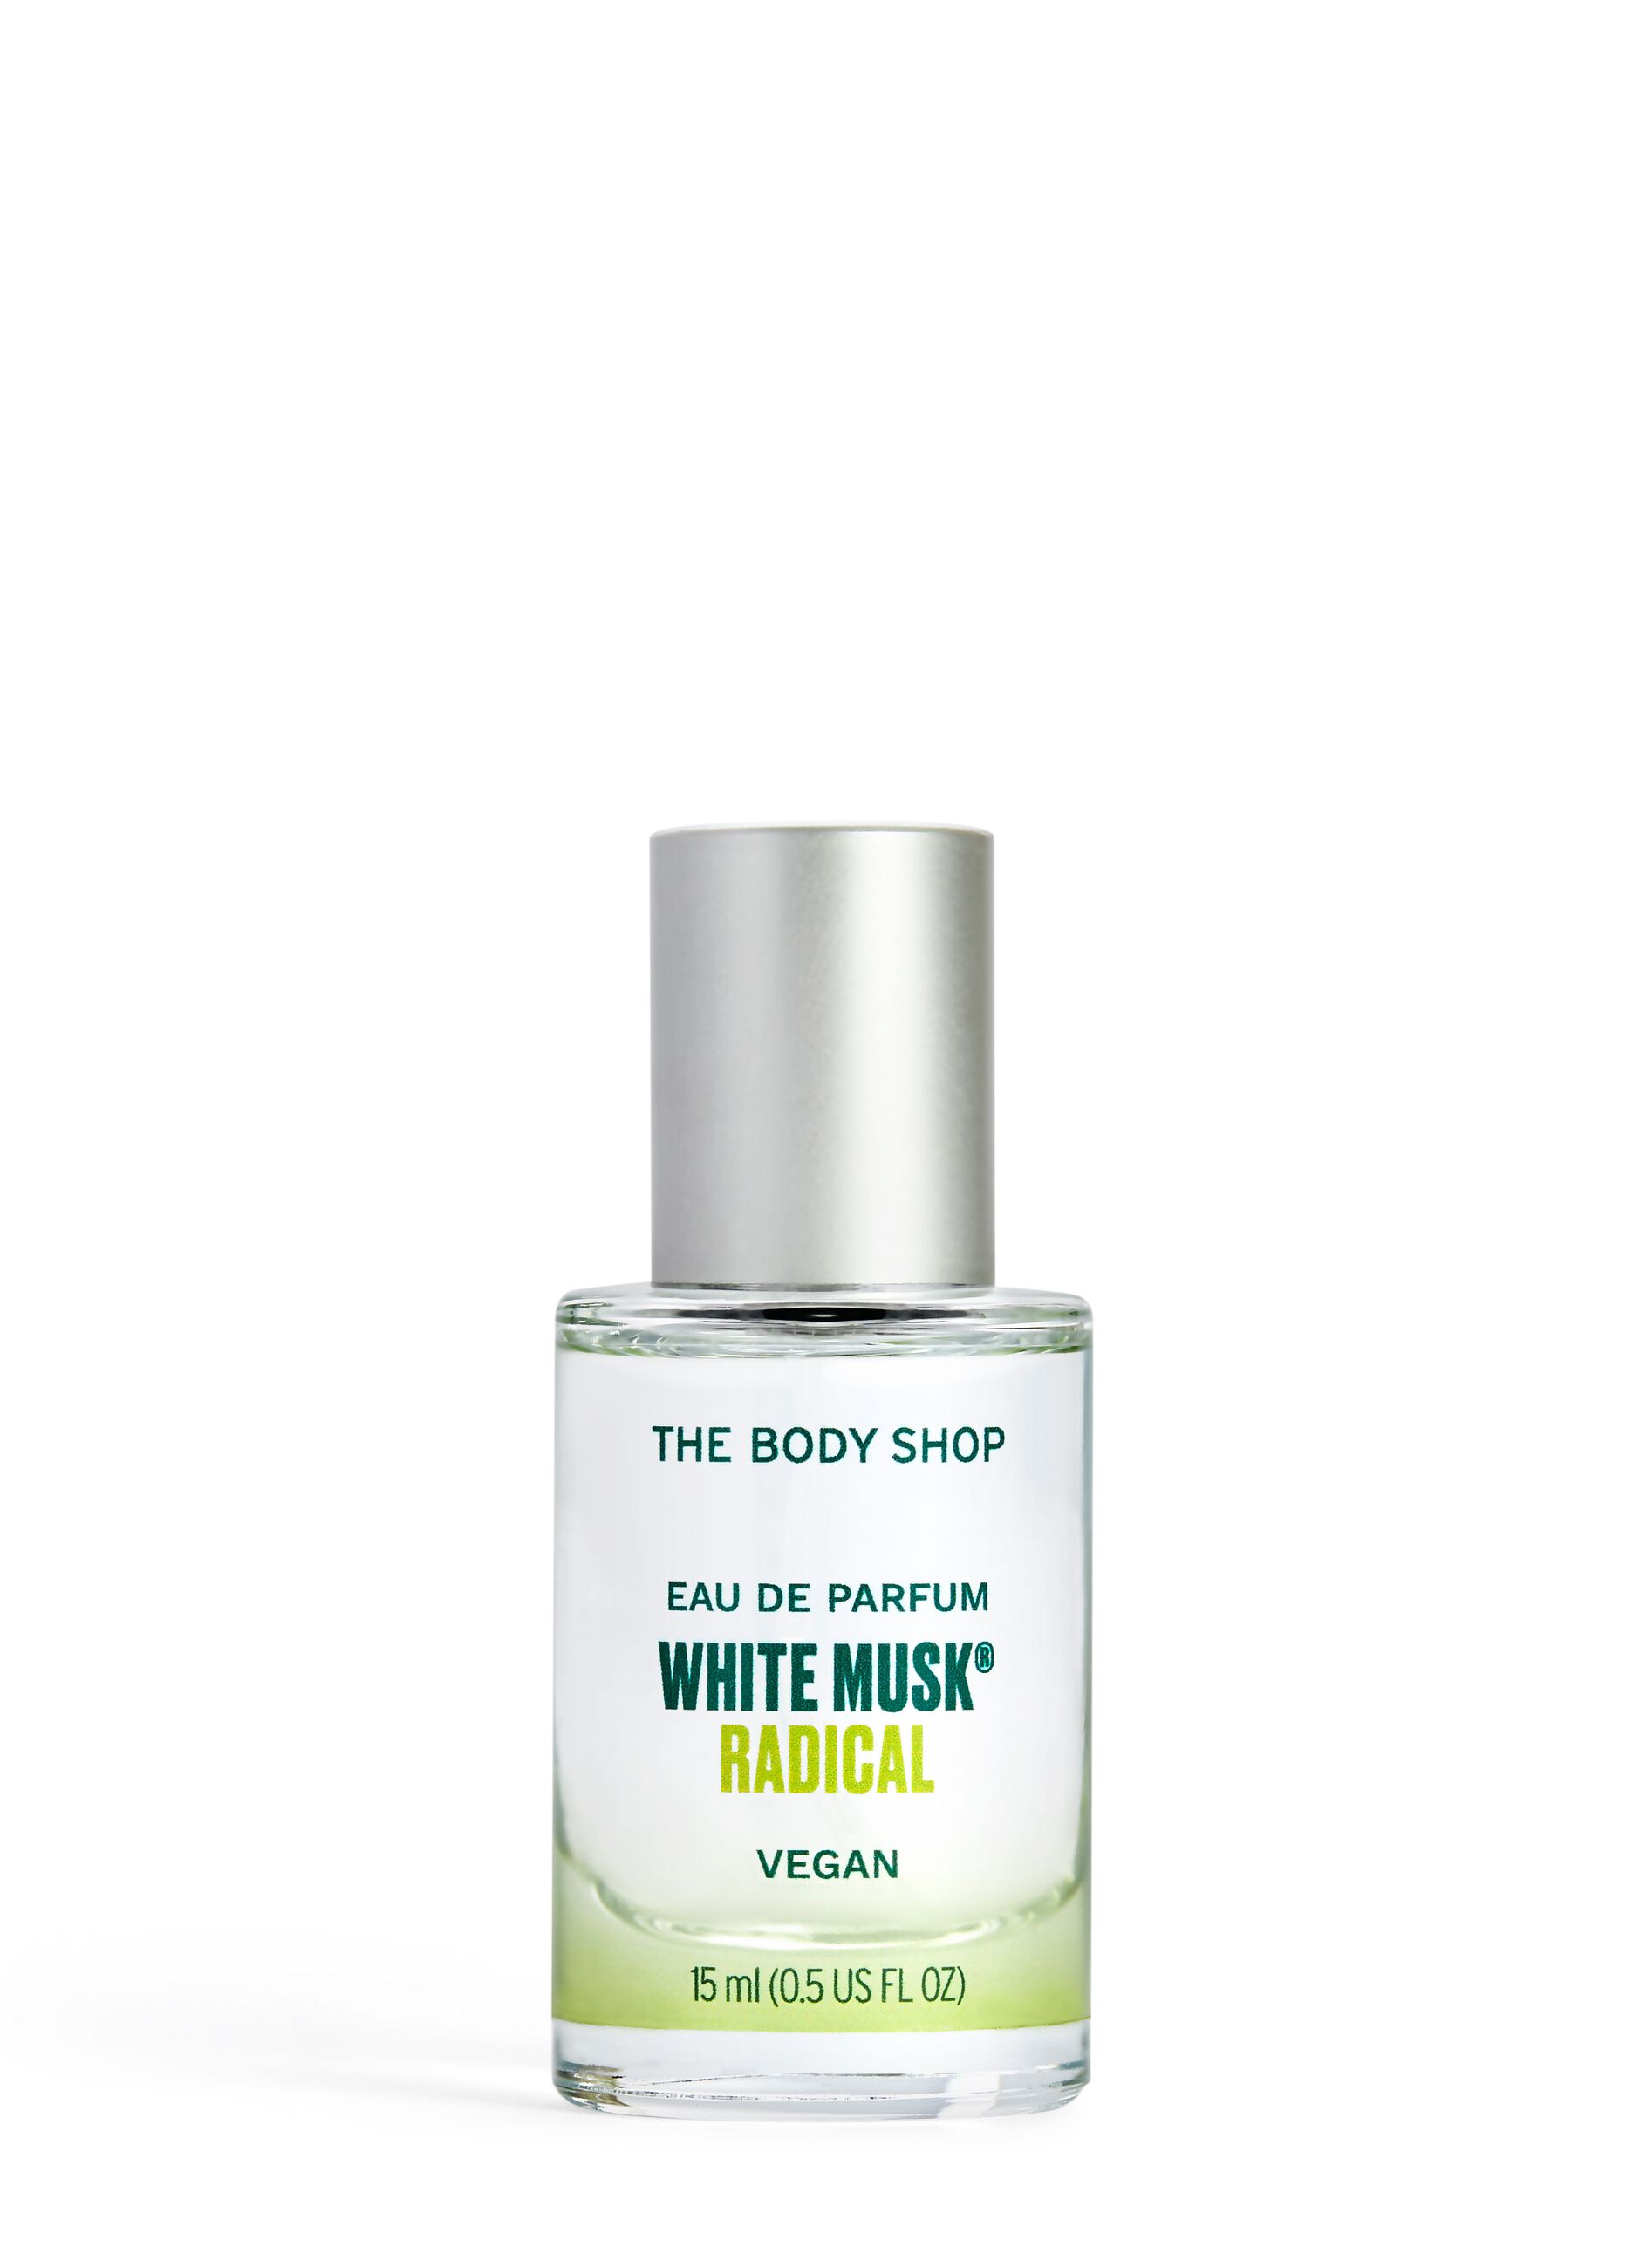 Eau de Parfum White Musk® Radical 15ml The Body Shop